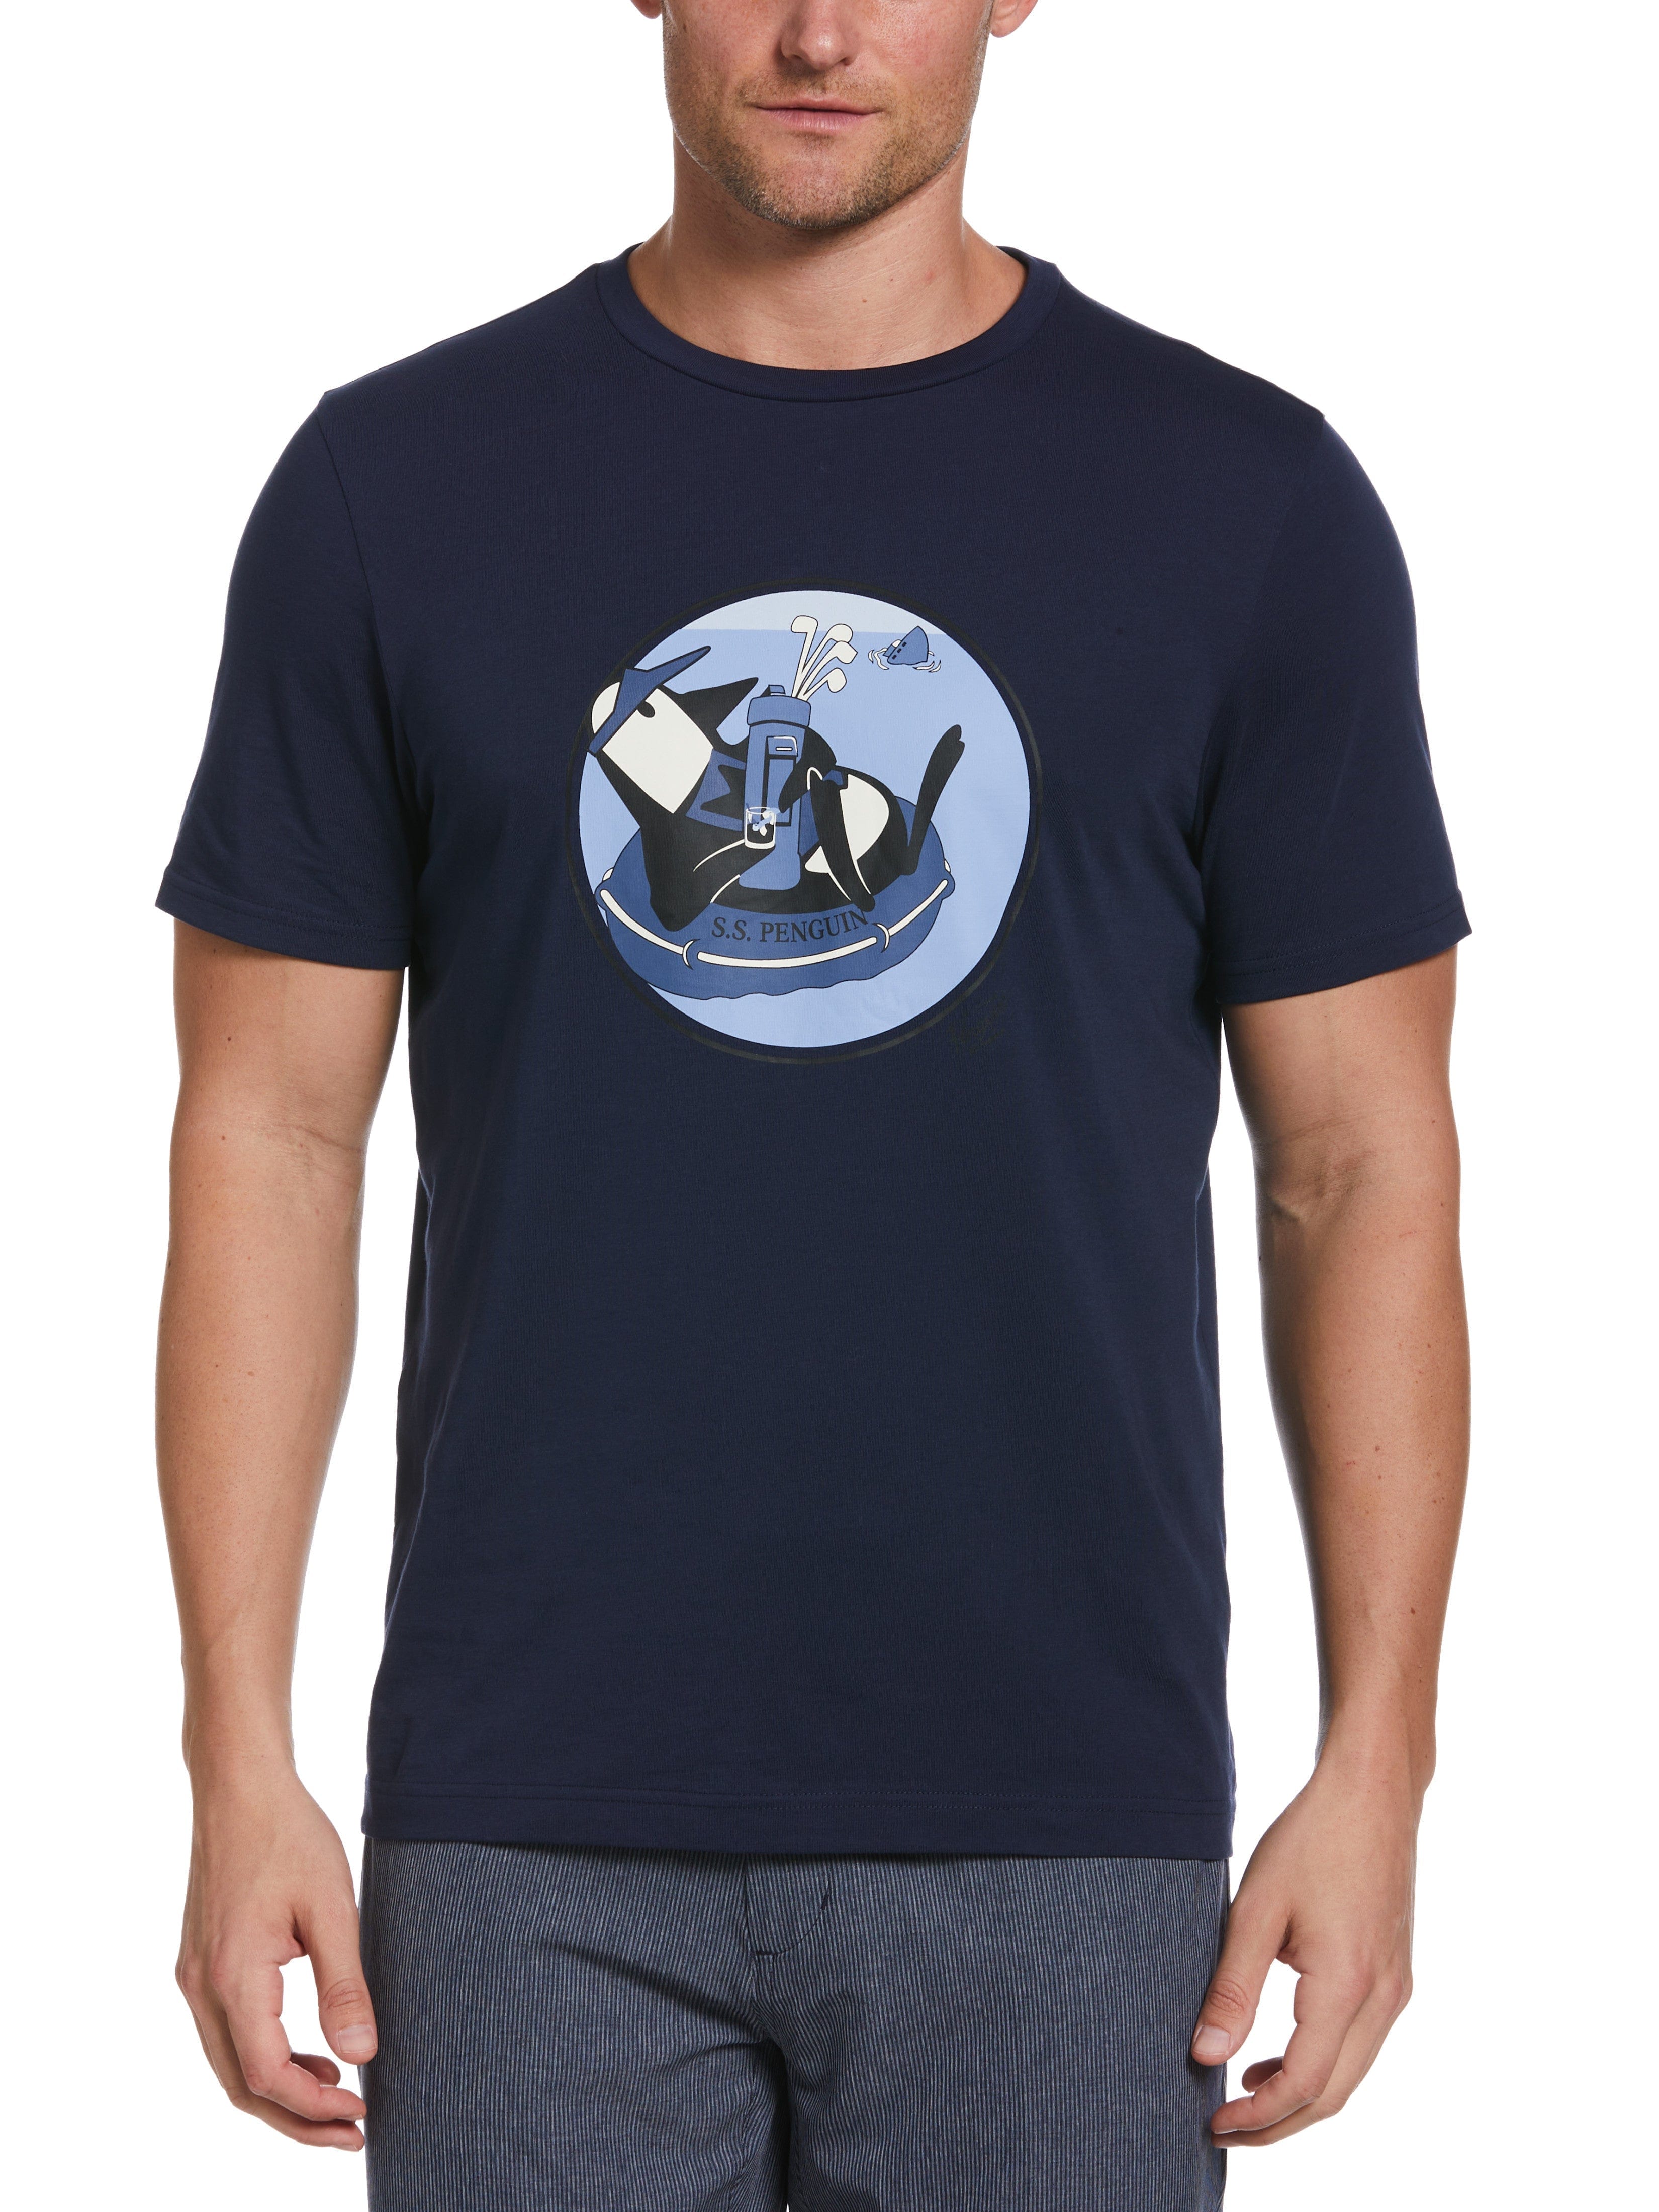 Original Penguin Mens Shipwreck Pete Graphic Golf T-Shirt, Size Large, Dark Navy Blue, 100% Cotton | Golf Apparel Shop